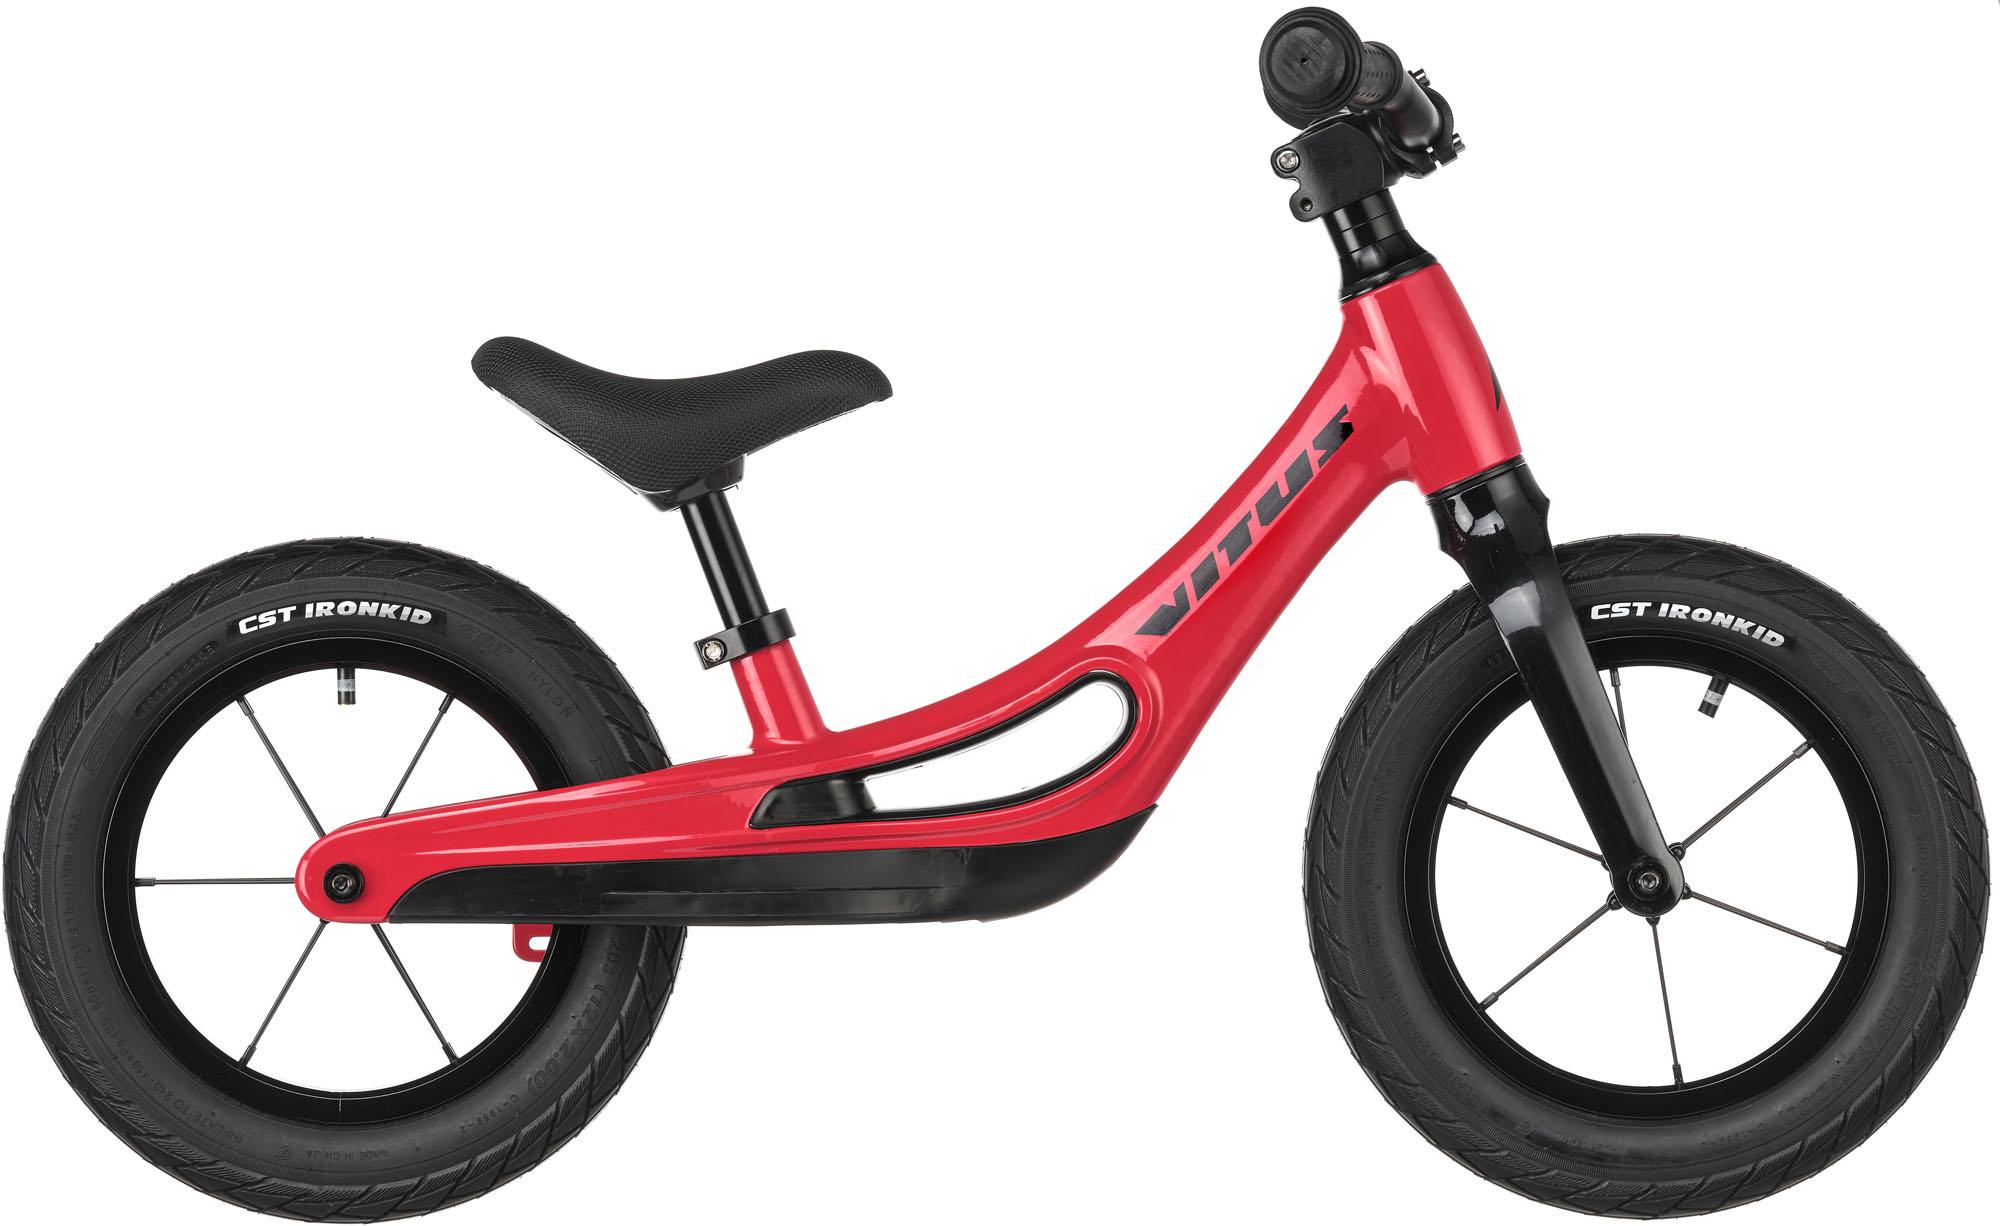 Vitus Smoothy Balance Bike - Red